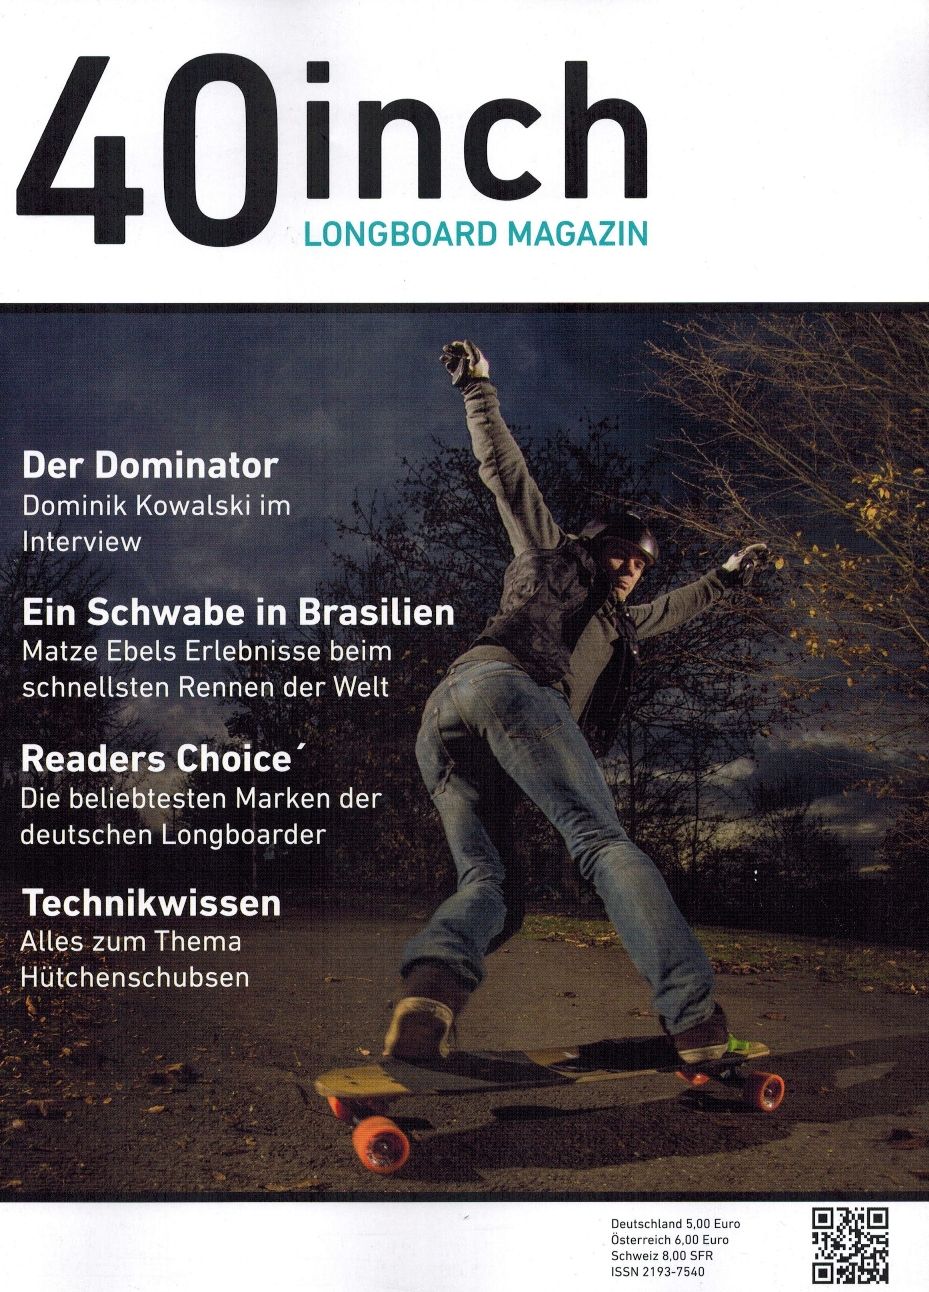 40inch-magazine-cover-dominik-kowalski-riptide-team-rider.jpg